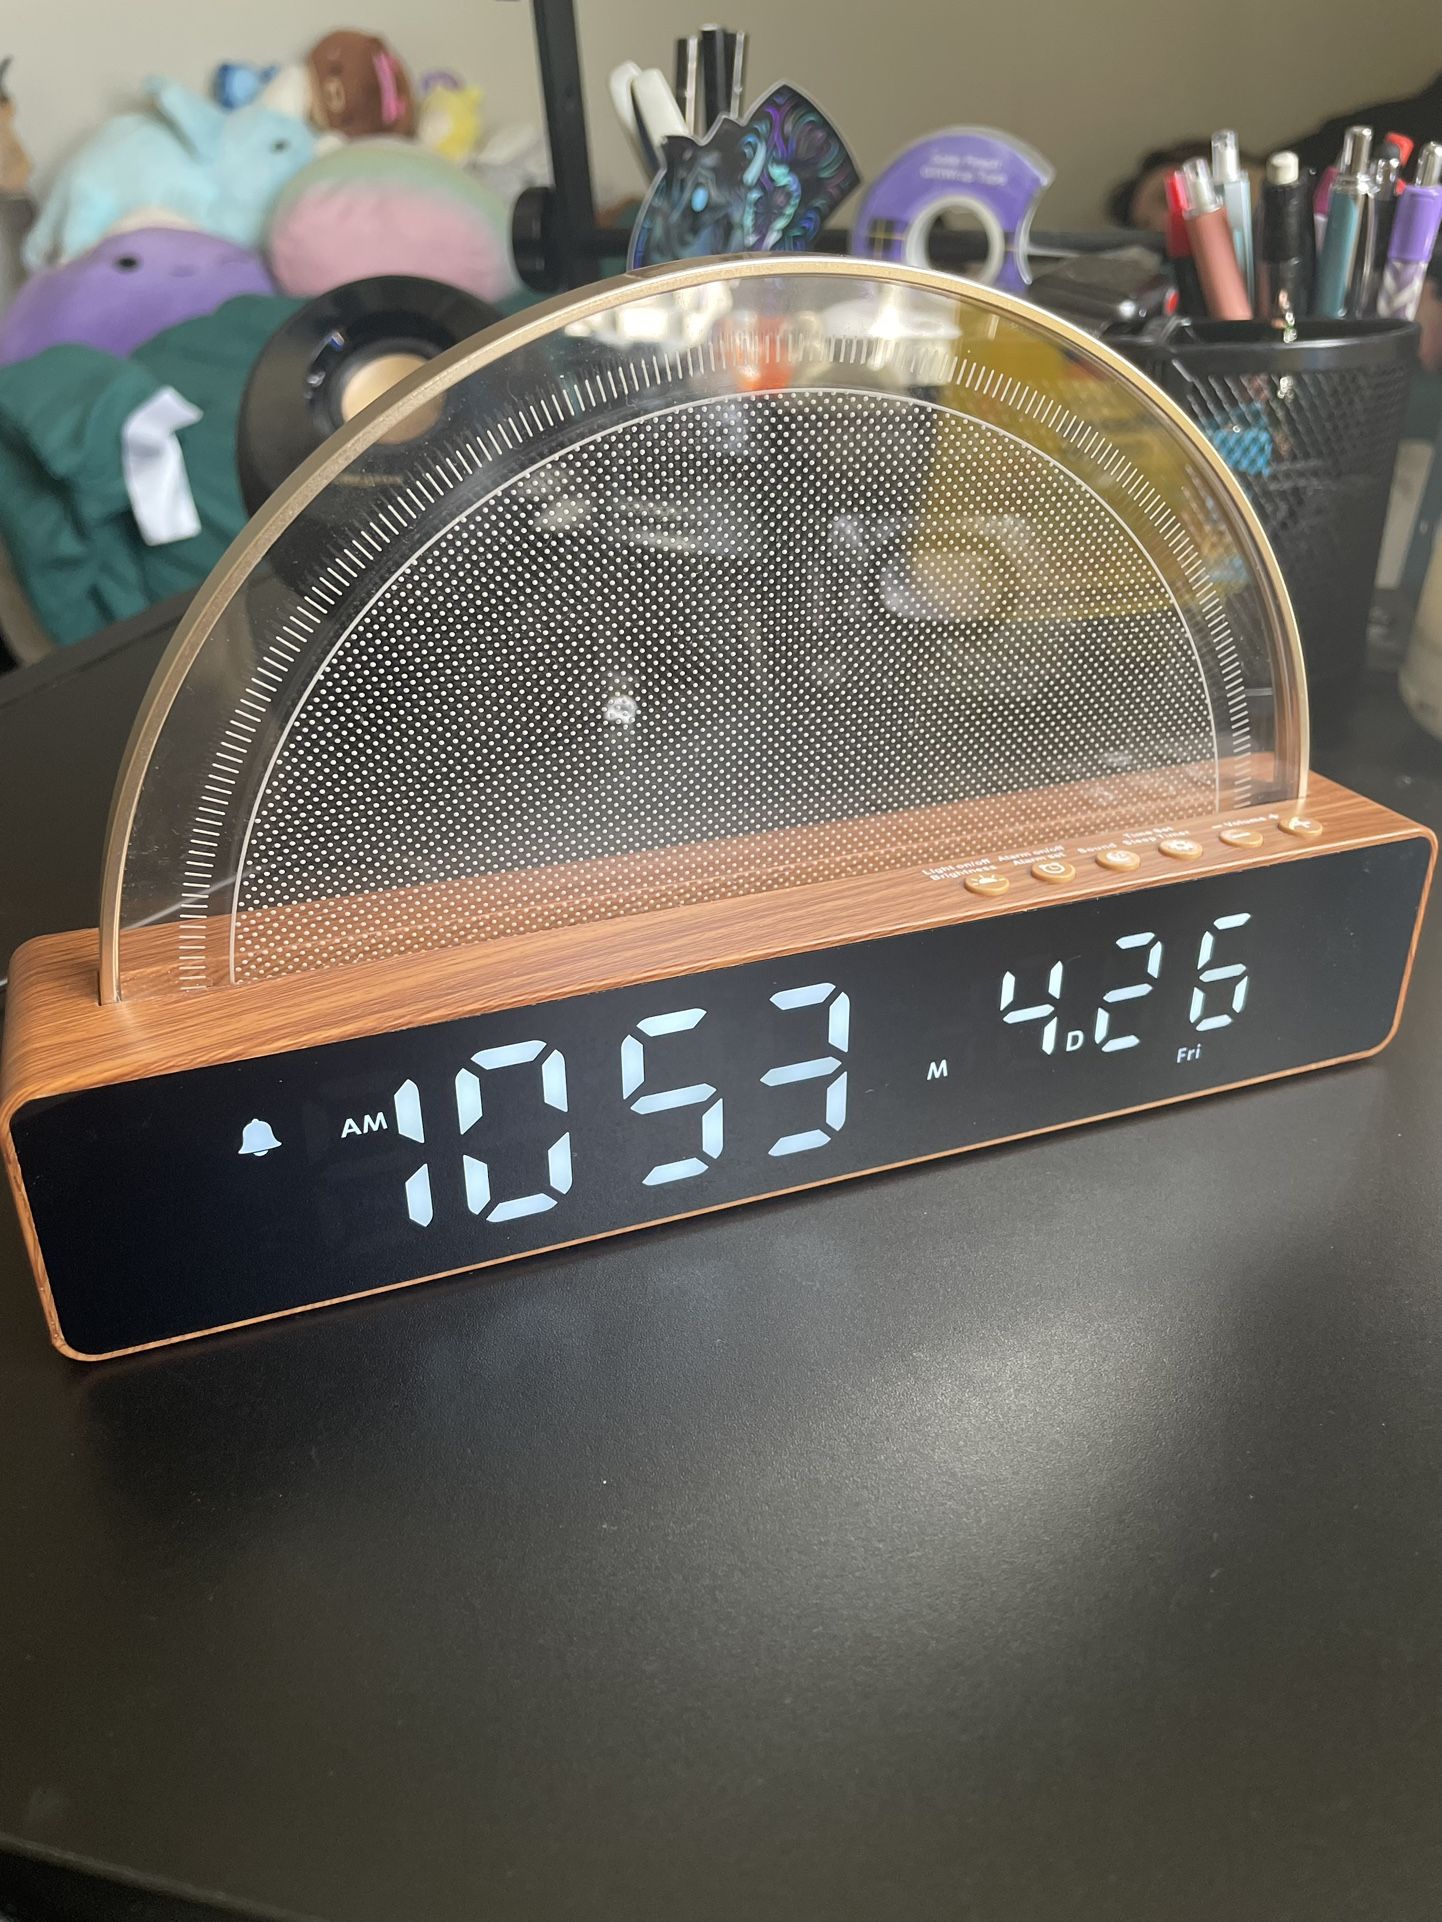 USB powered sunlight alarm clock